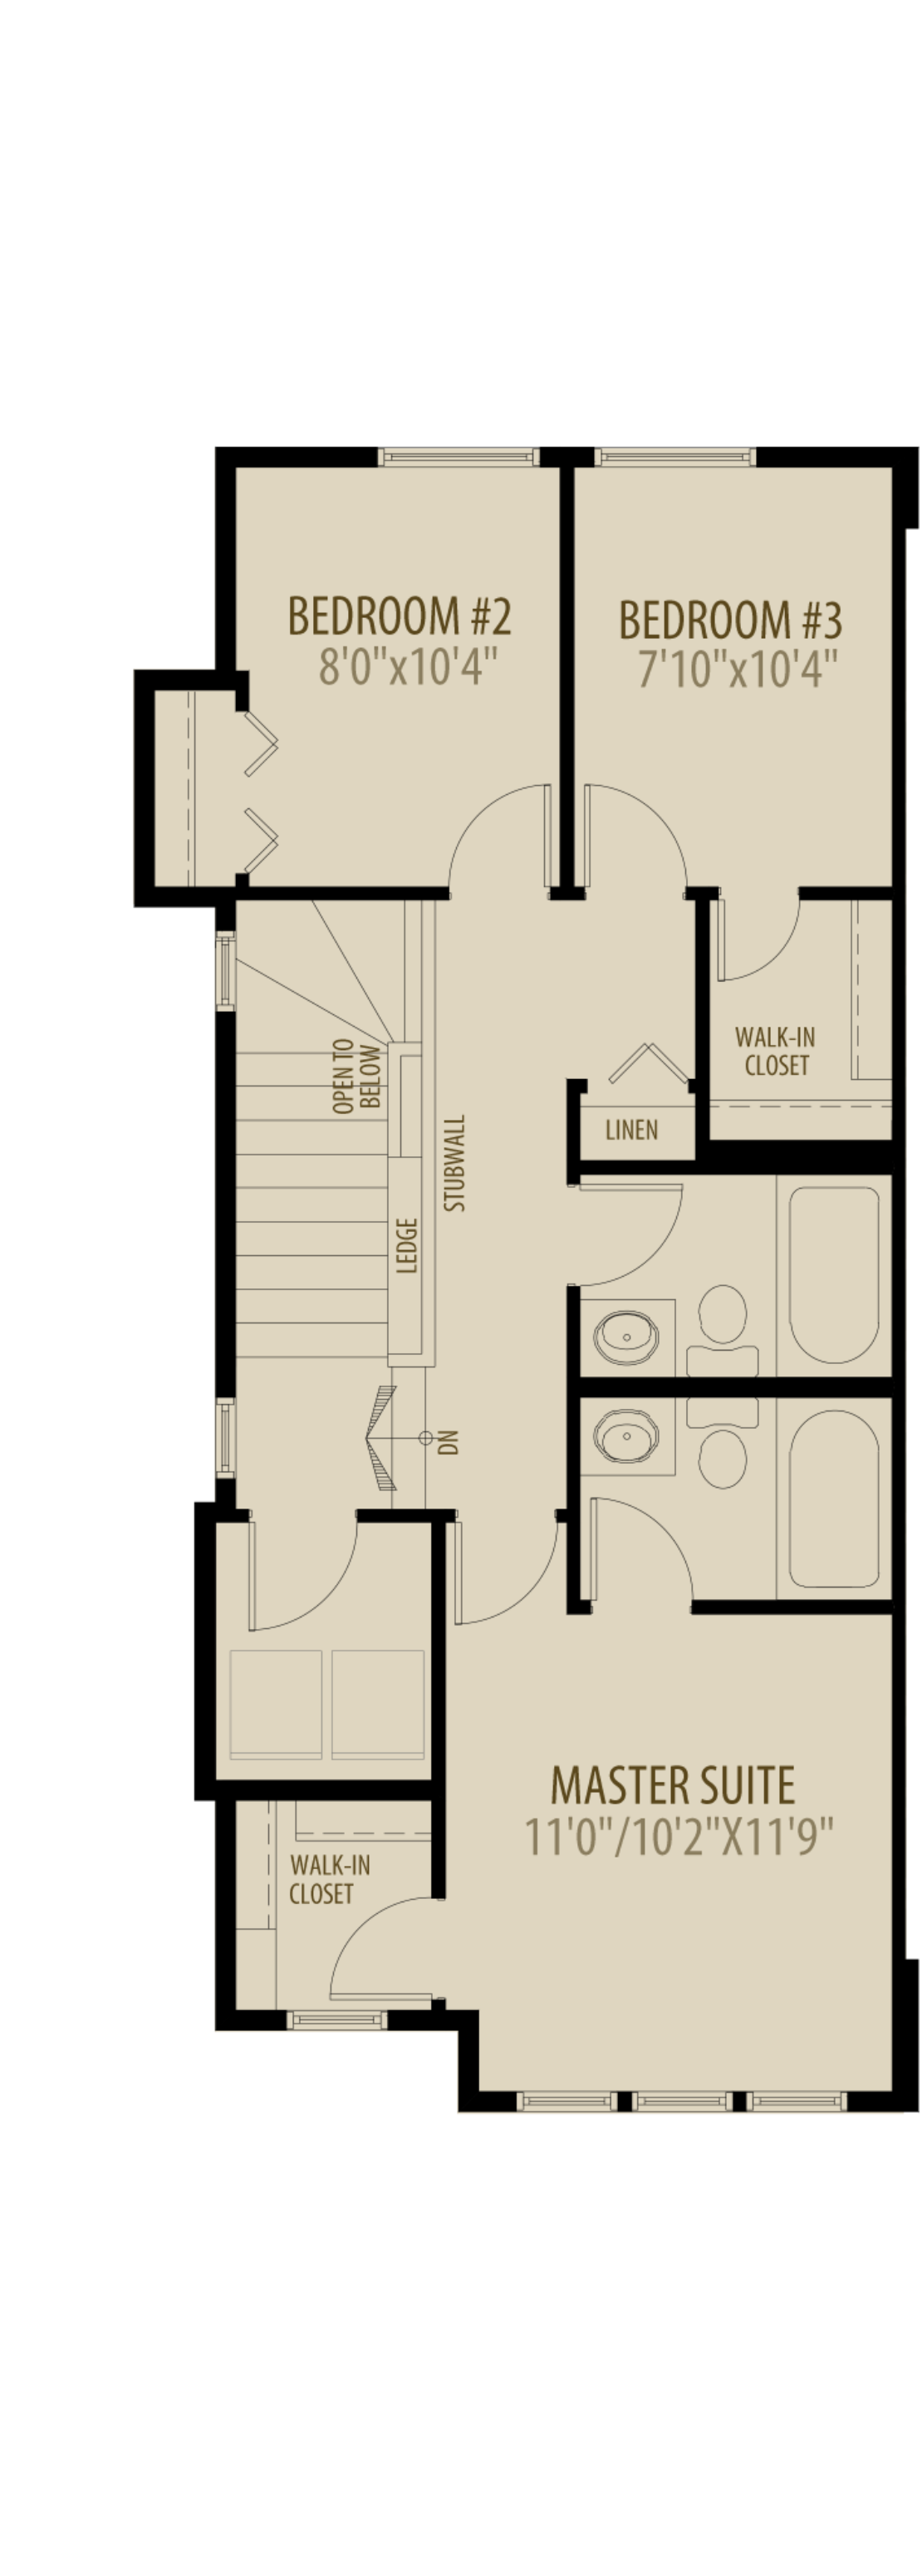 Revised Upper Floor adds 15 sq ft